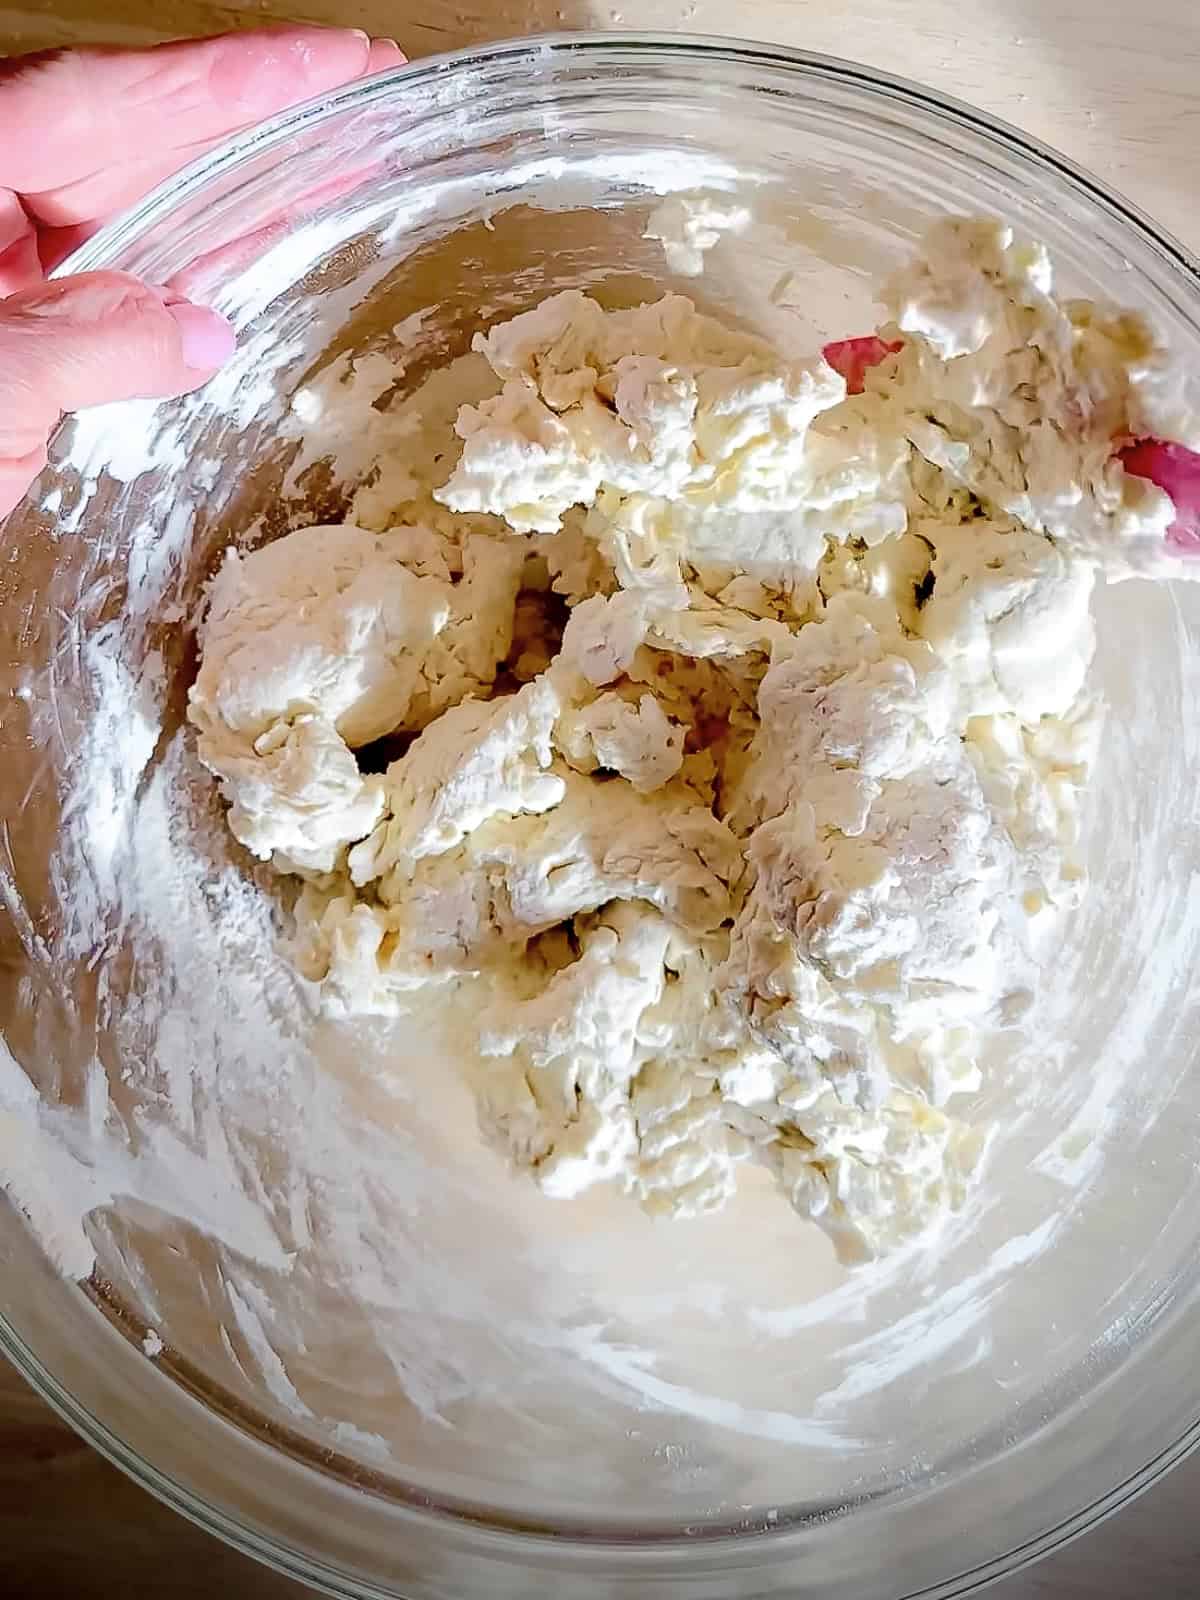 Mixing together self rising flour and Greek yogurt.